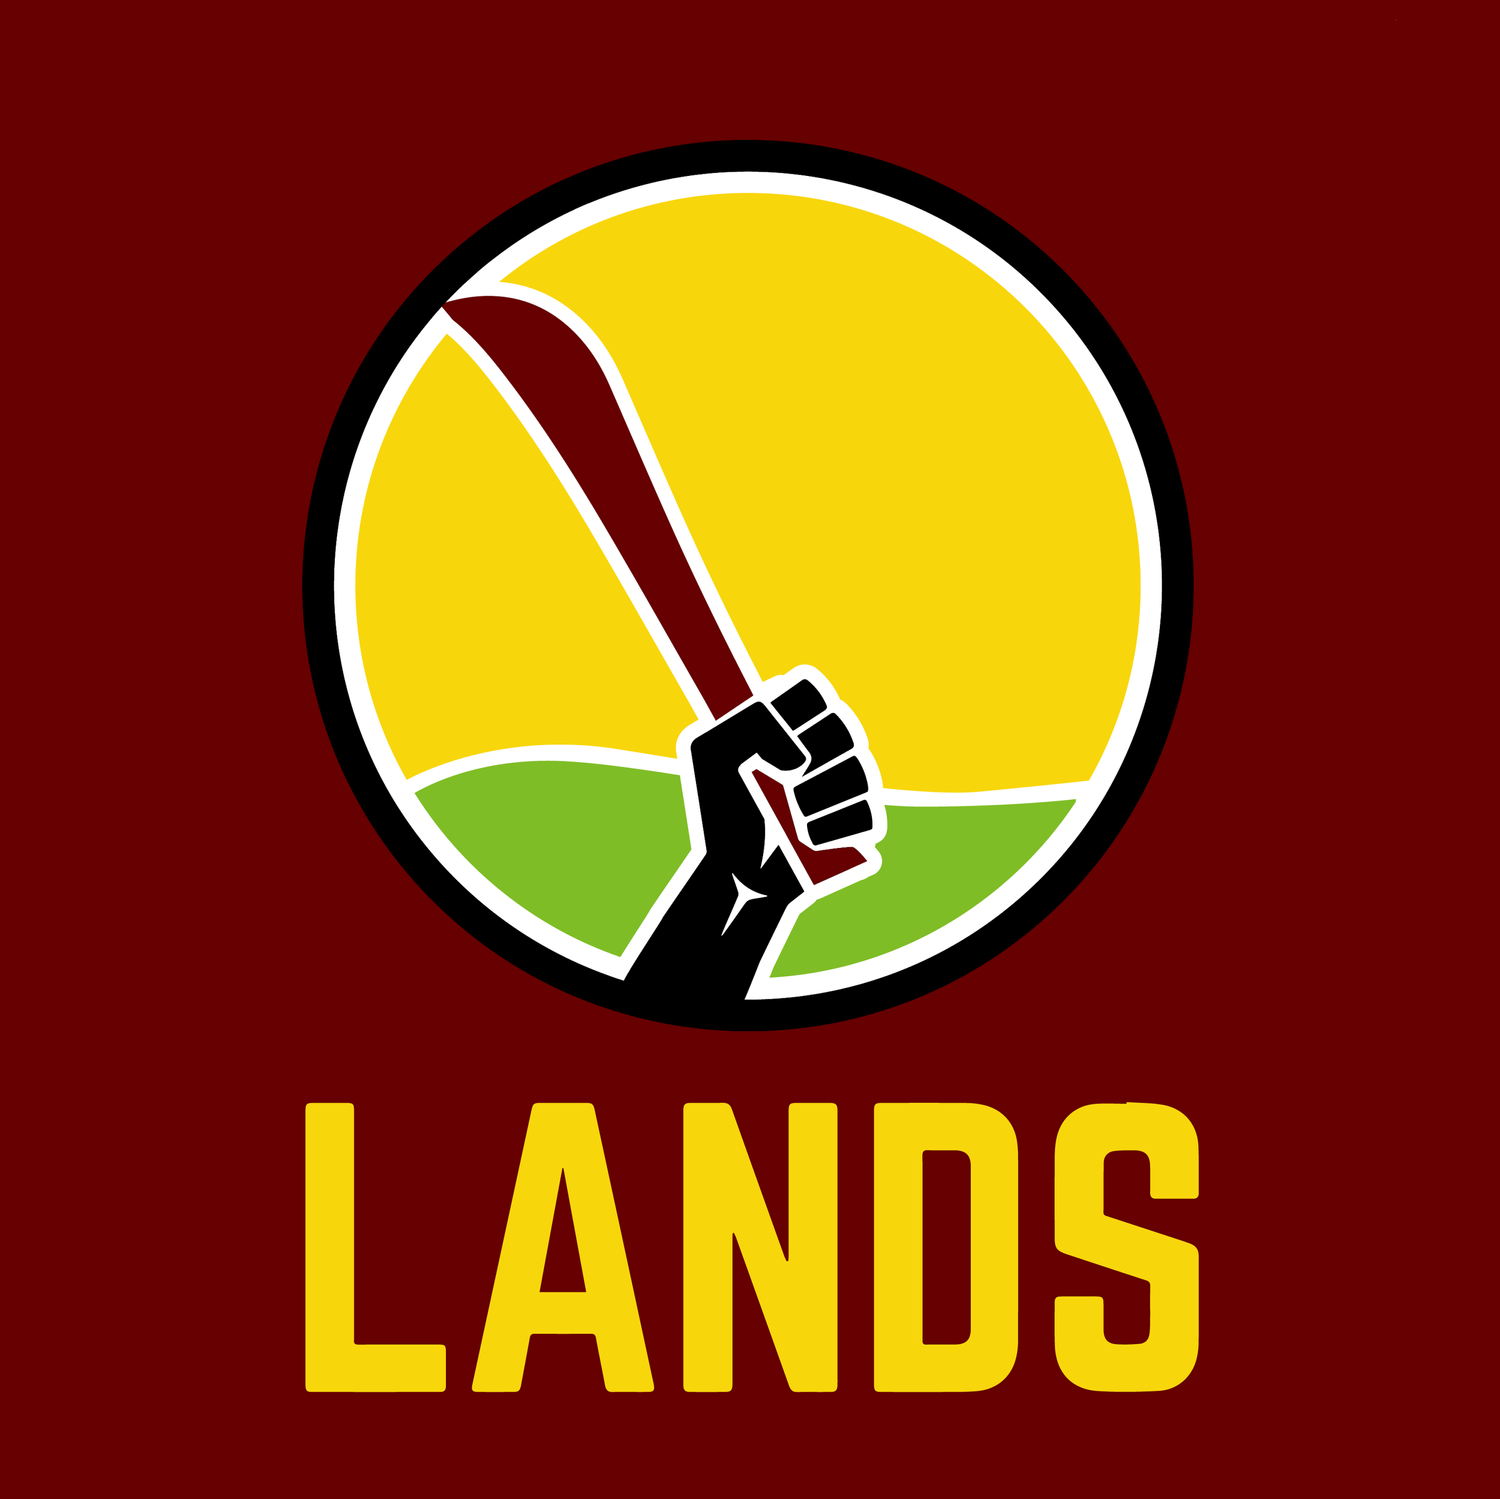 Jamaica LANDS